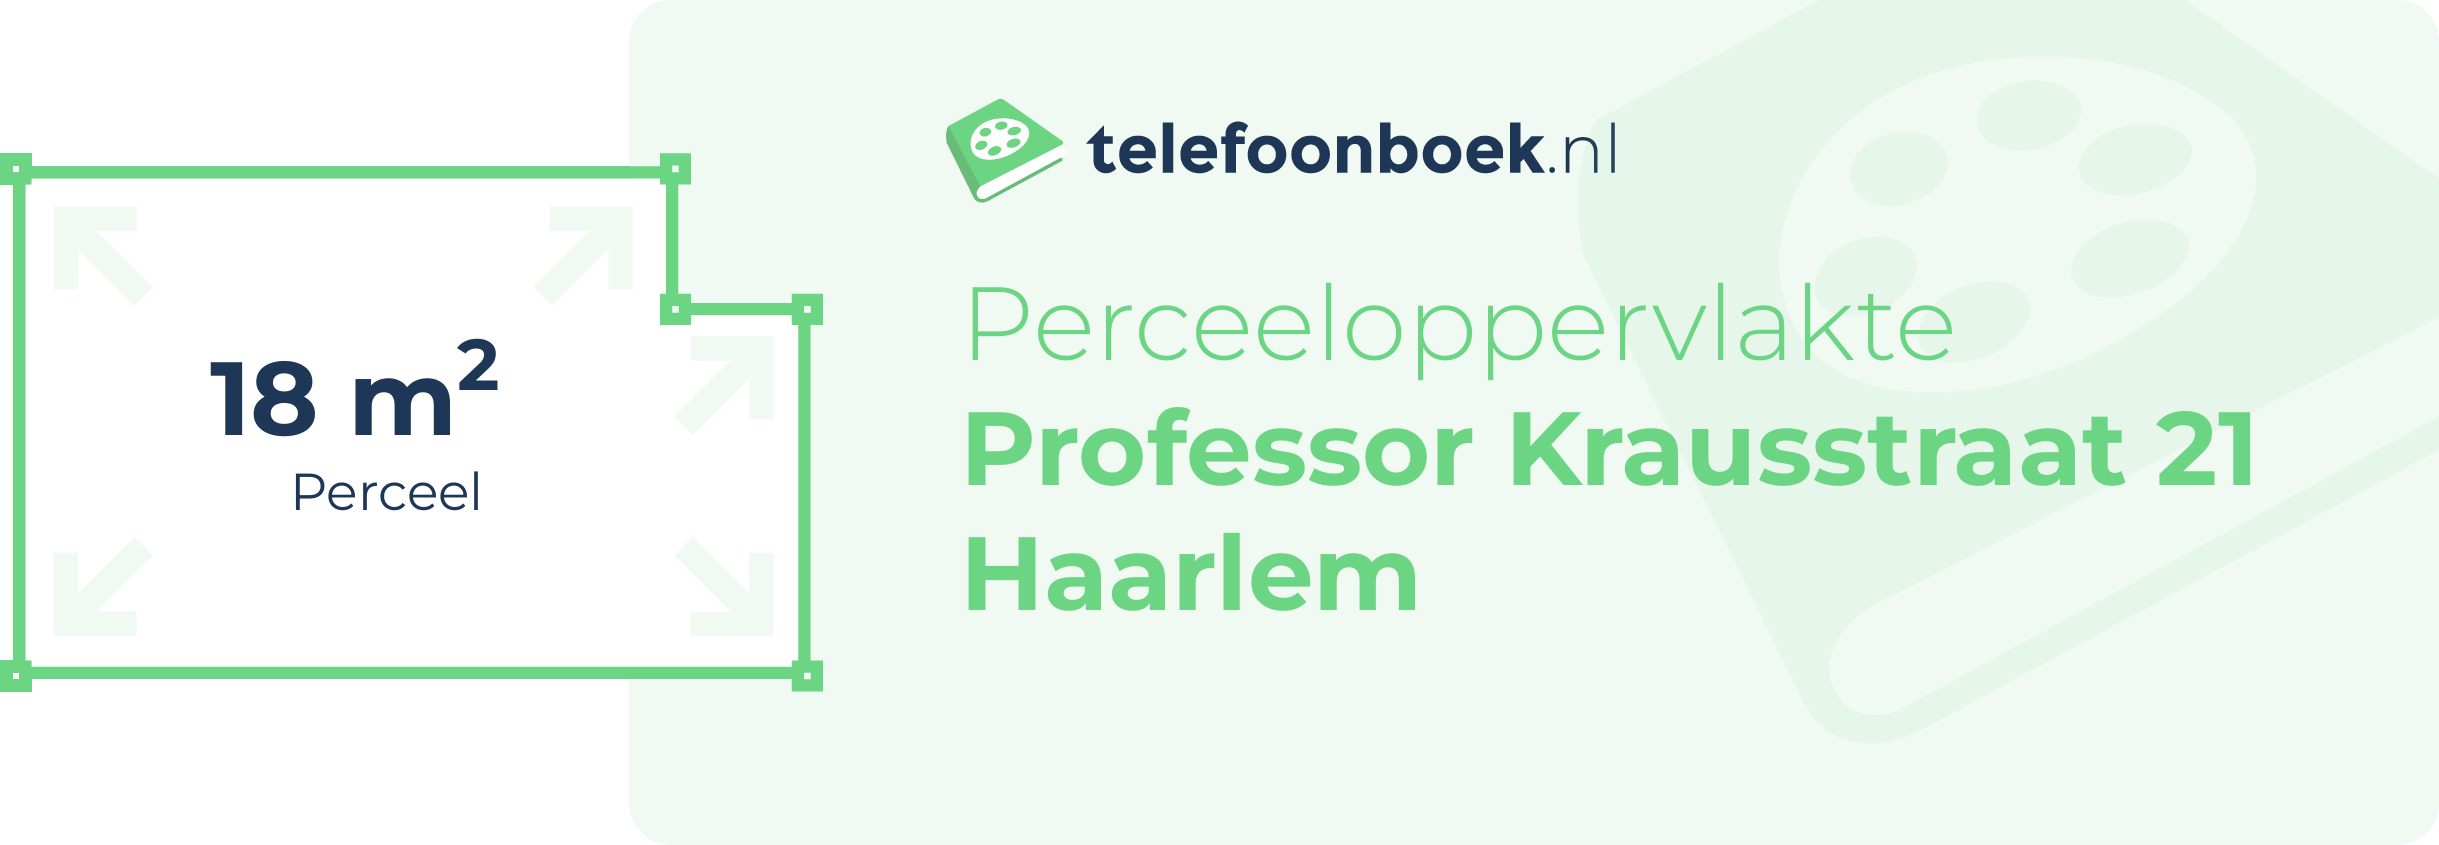 Perceeloppervlakte Professor Krausstraat 21 Haarlem